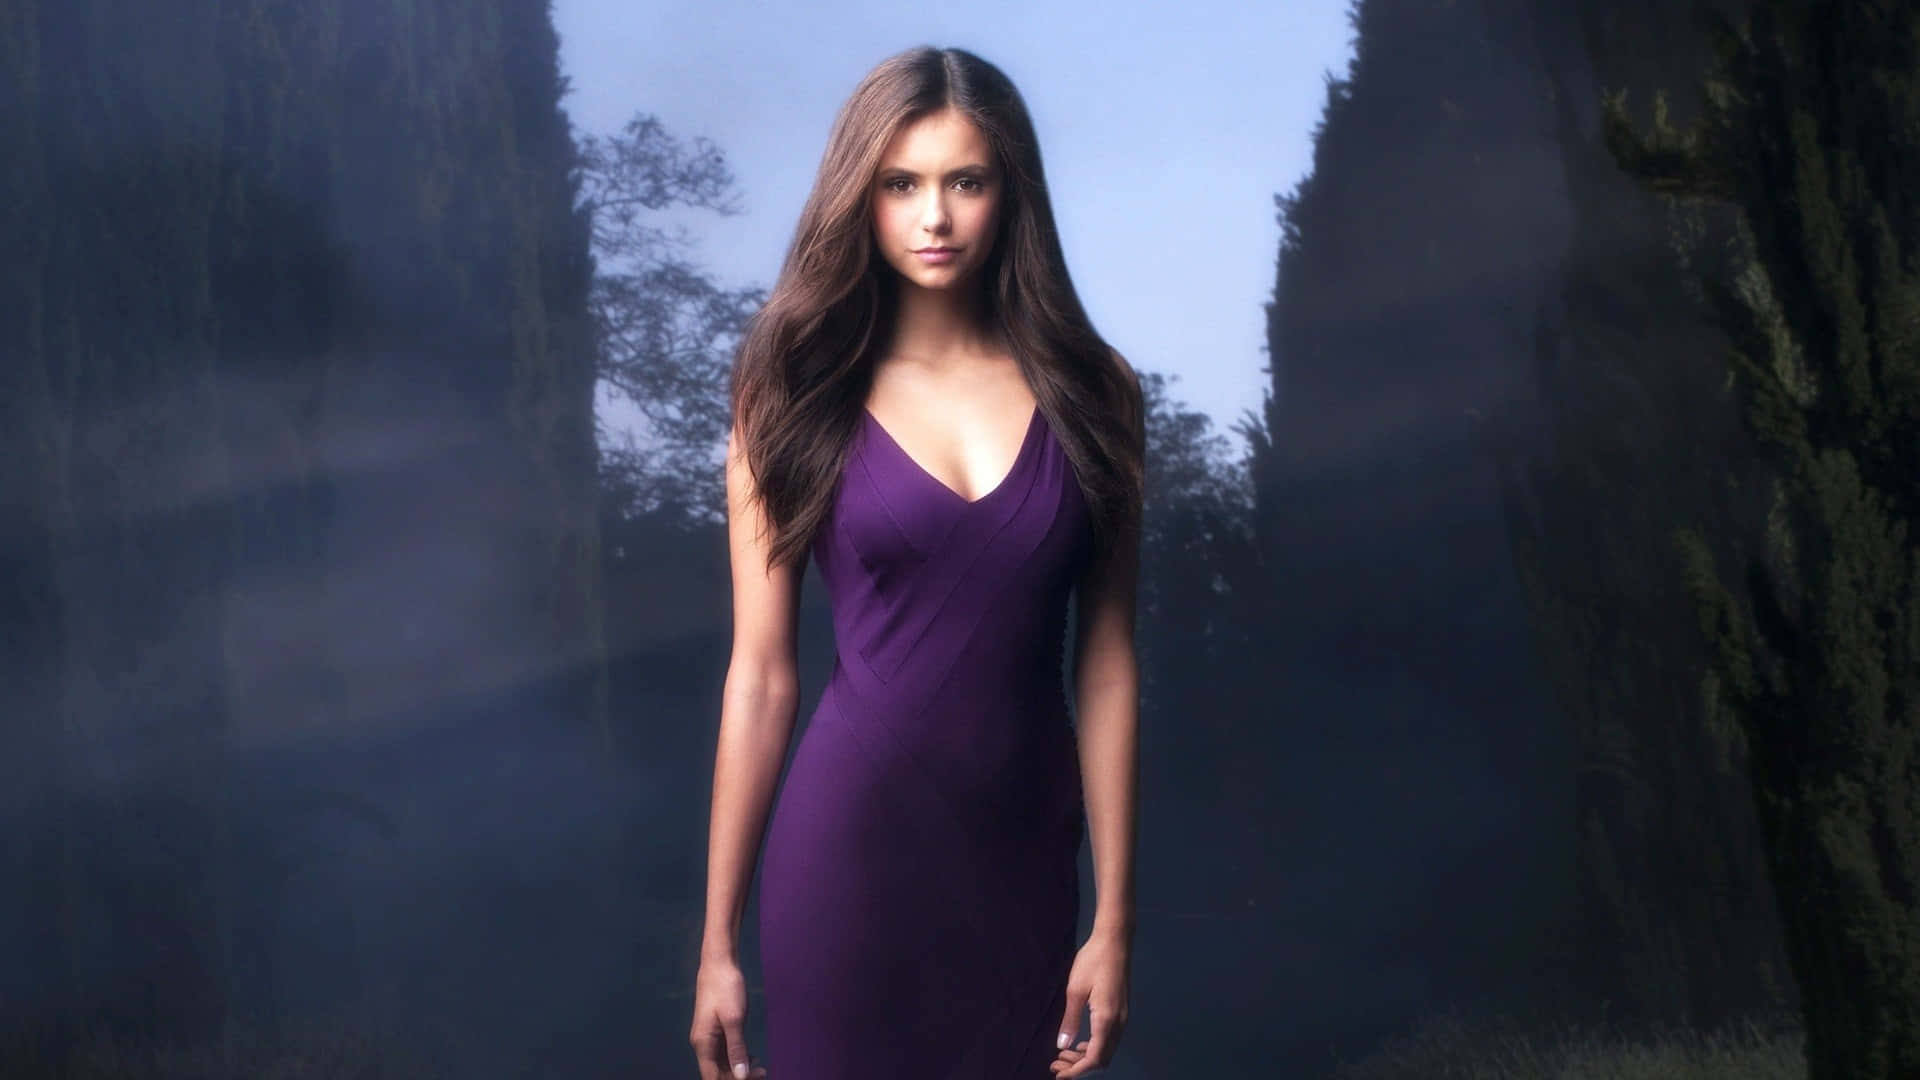 Feel luxurious this season in this beautiful rich purple dress Wallpaper